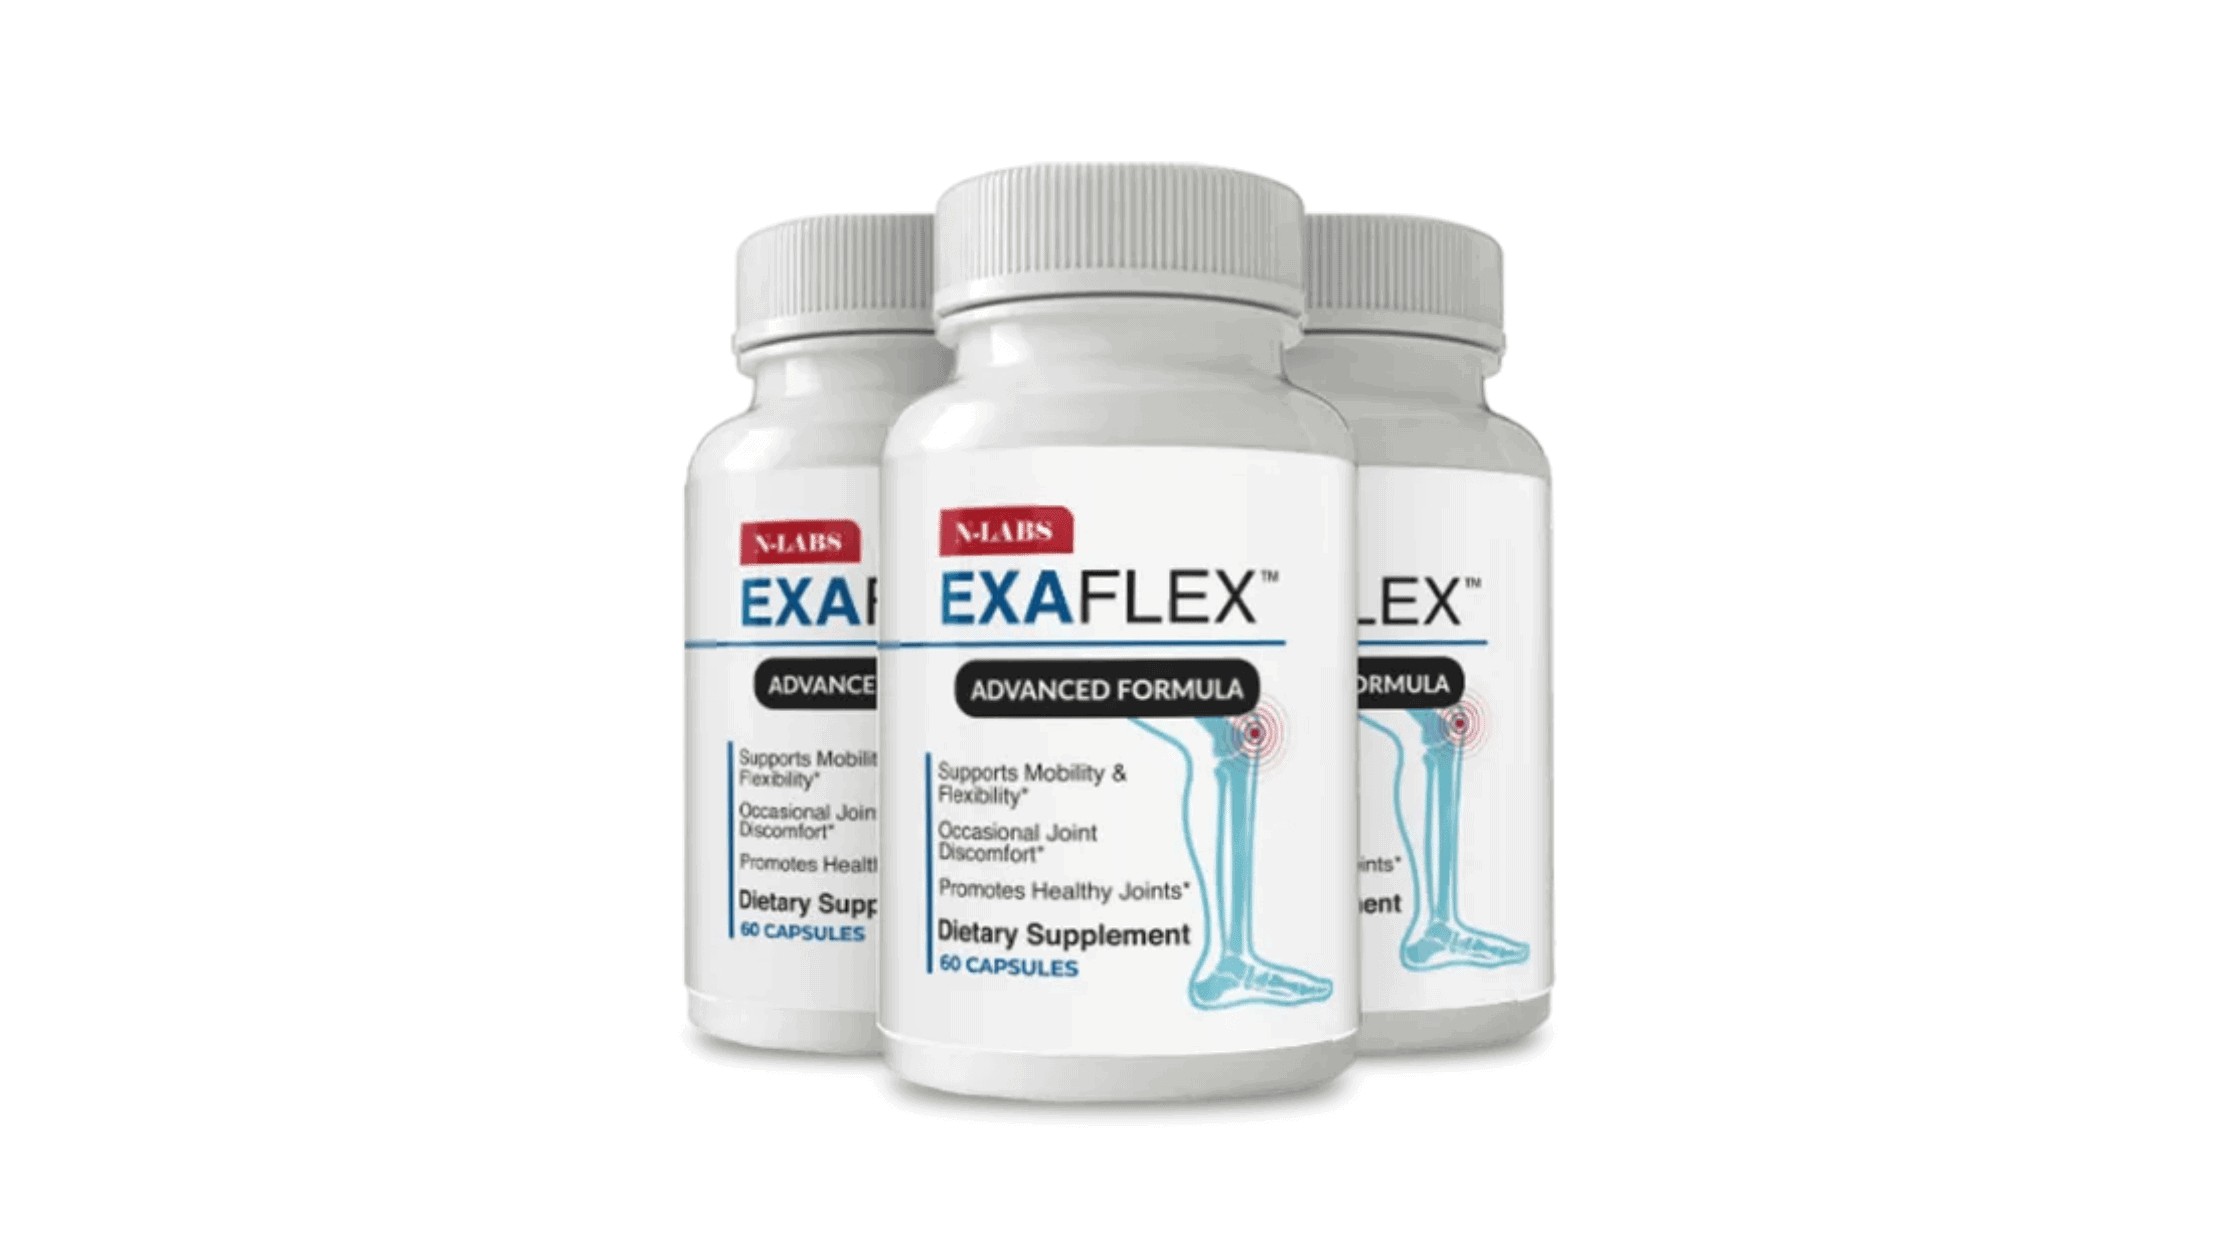 ExaFlex joint pain relief supplement